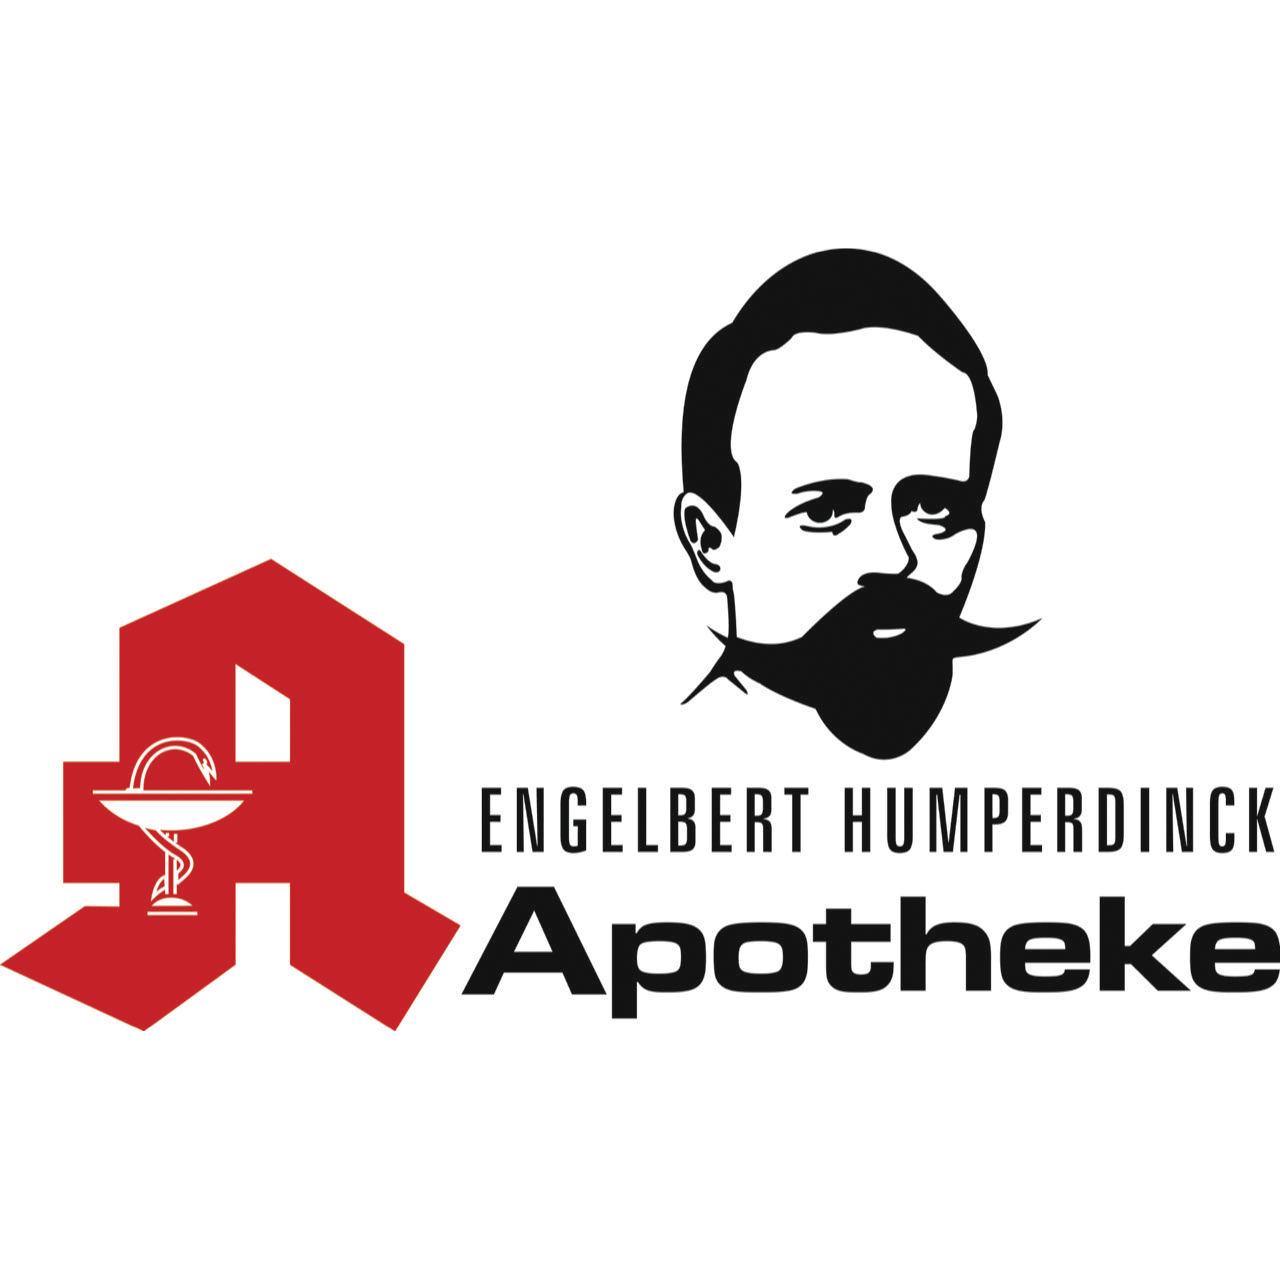 Engelbert Humperdinck Apotheke